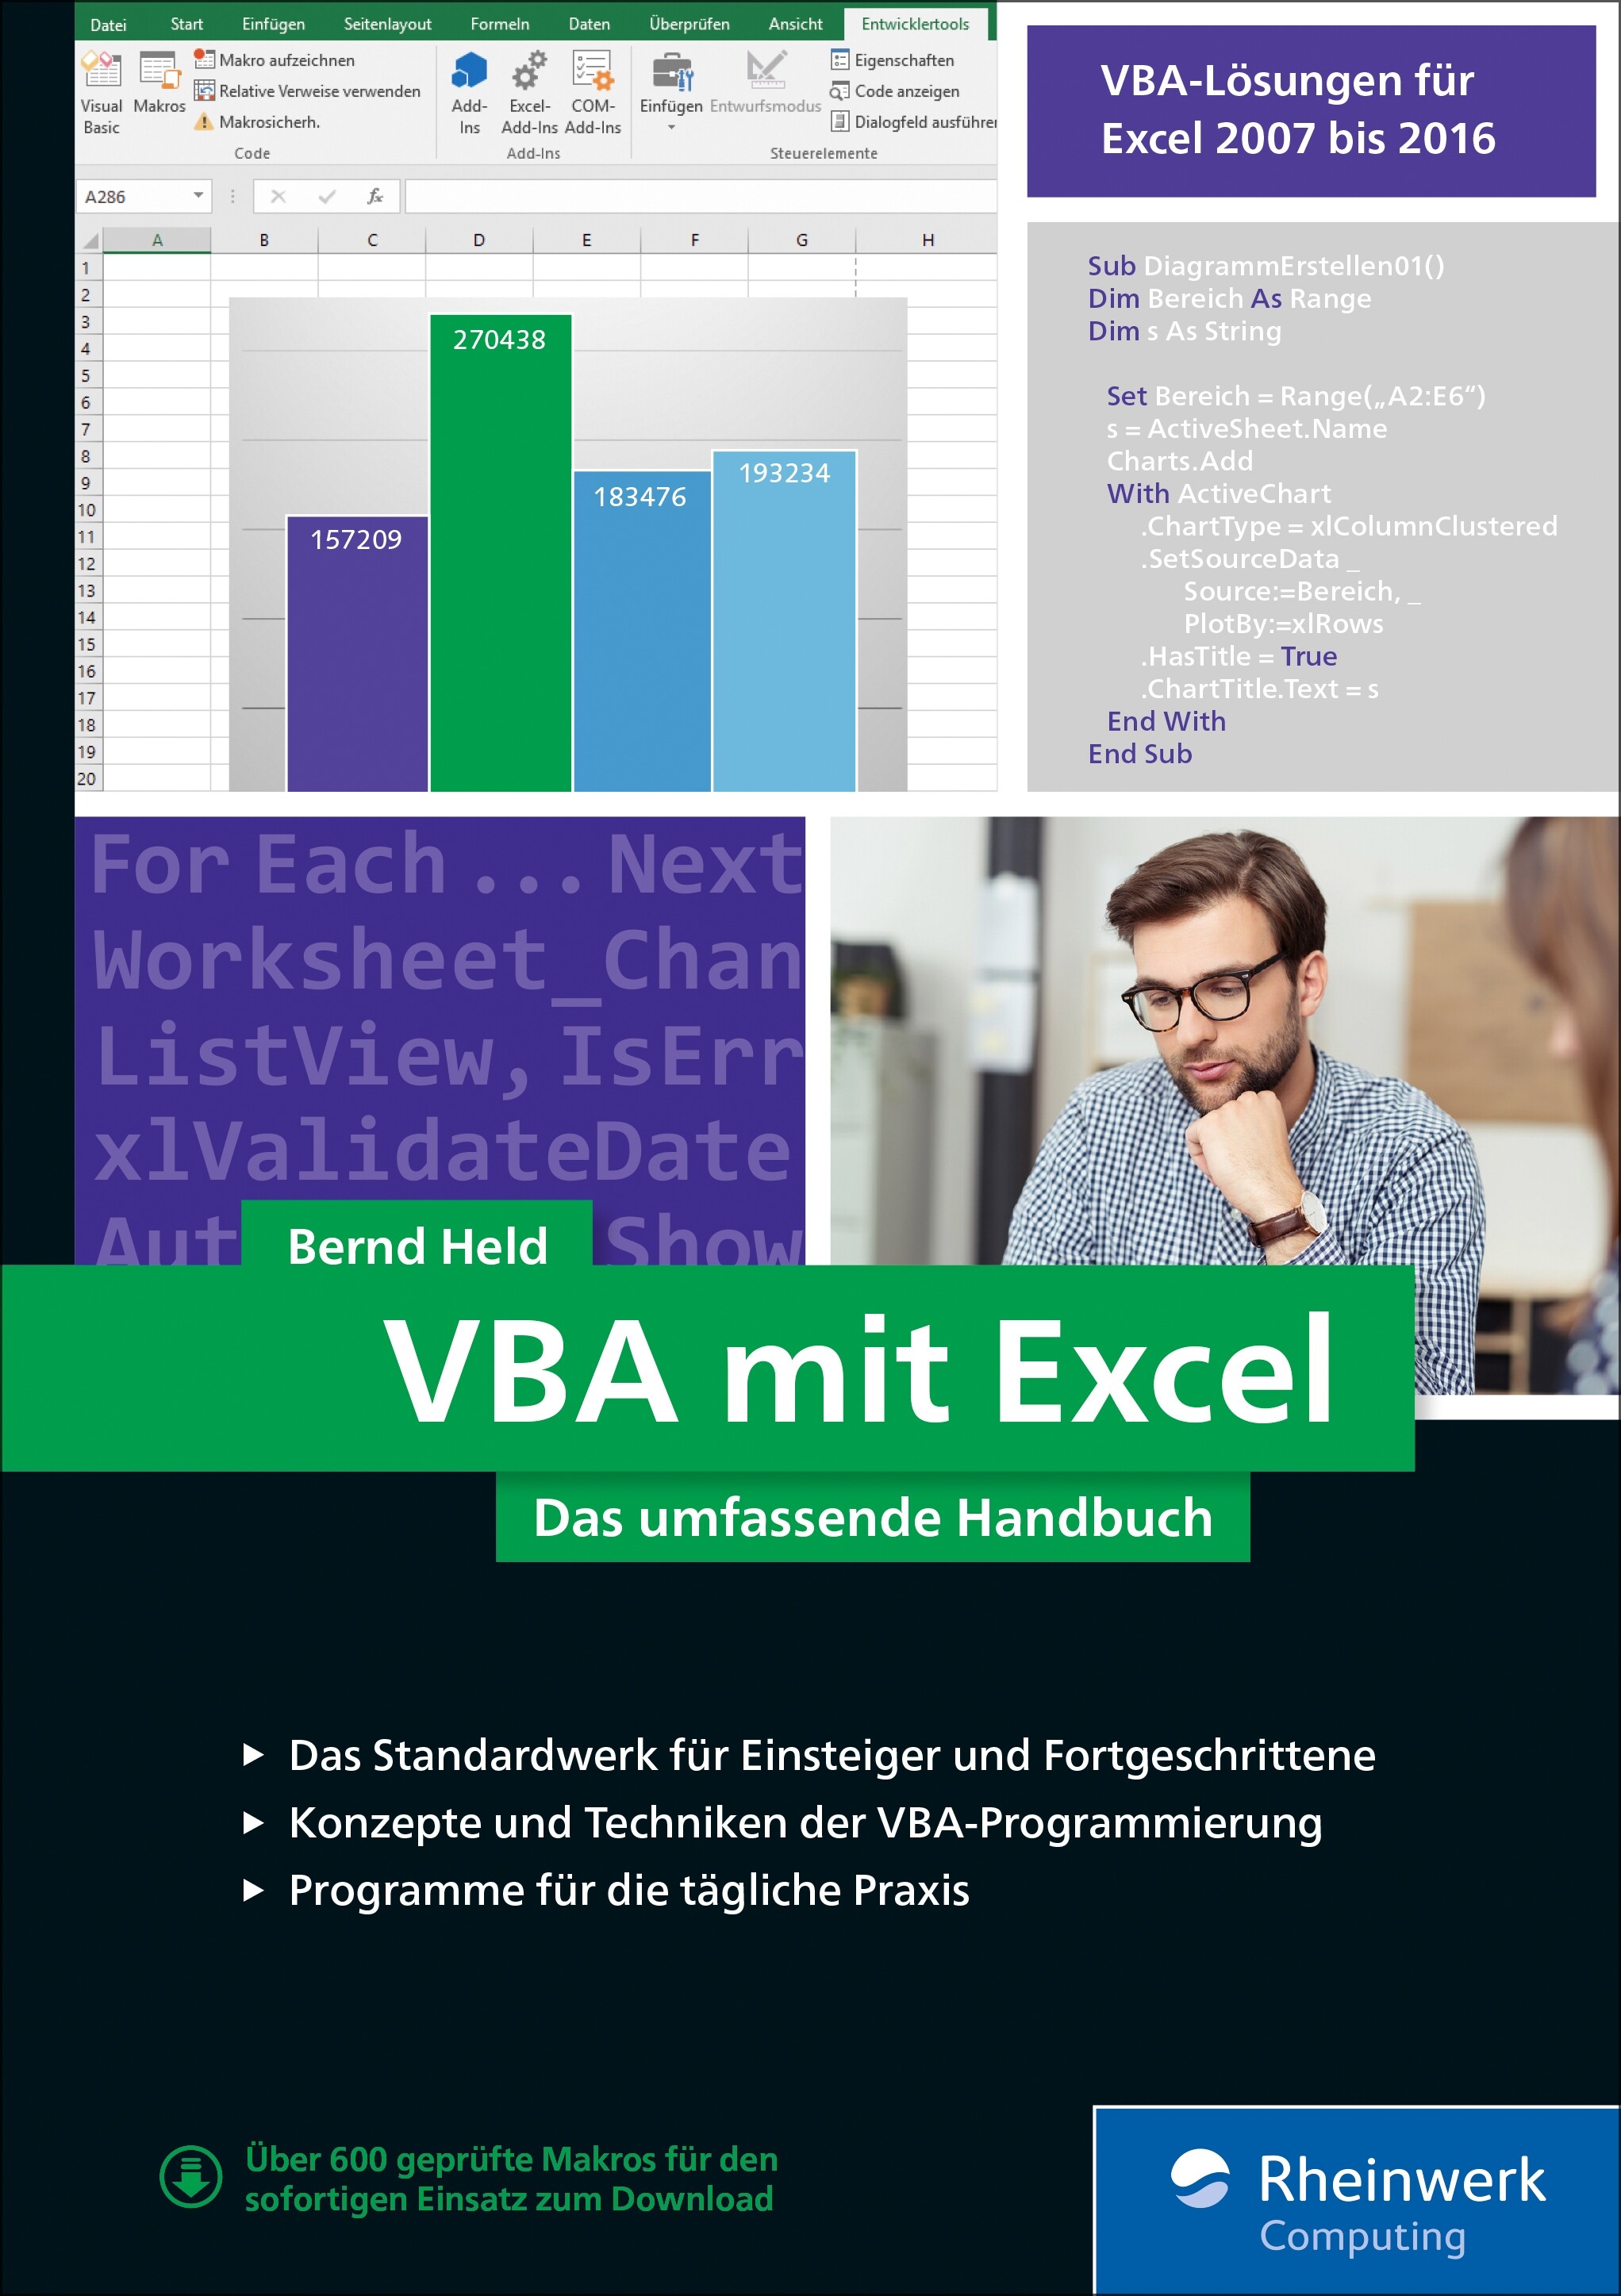 VBA mit Excel